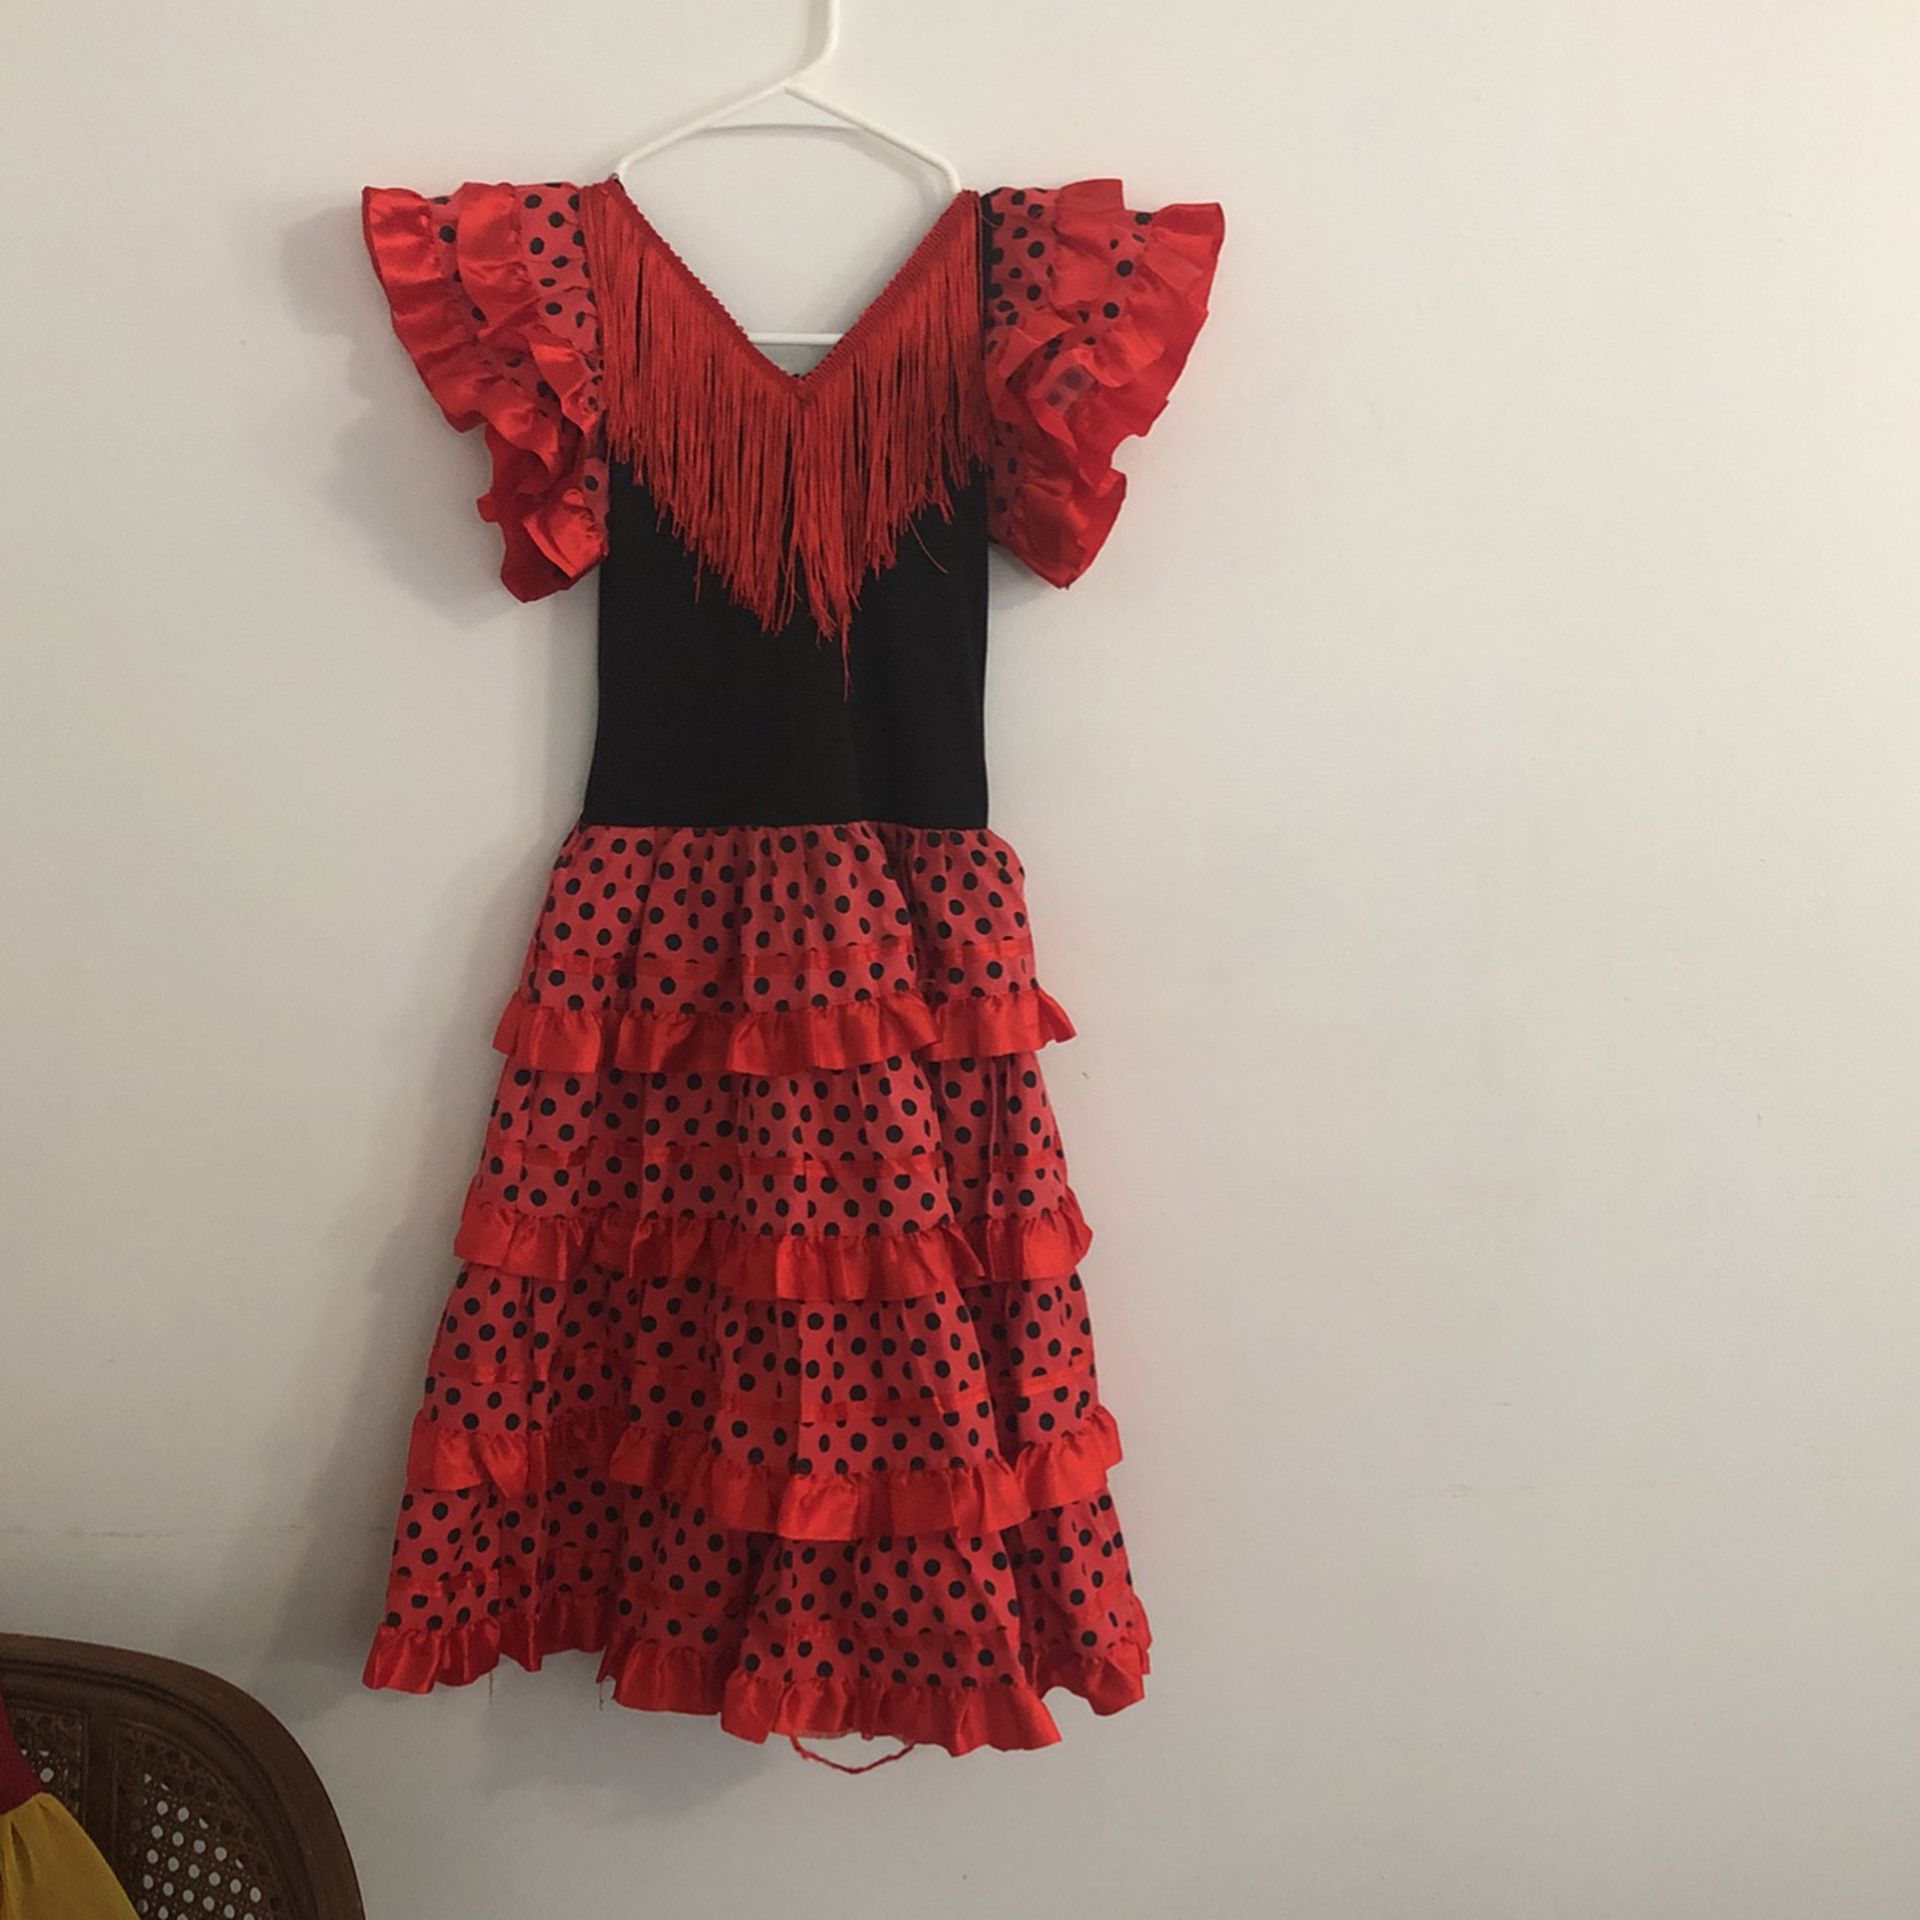 Cute little Flamenco costume size 8 for Halloween or dance recital￼